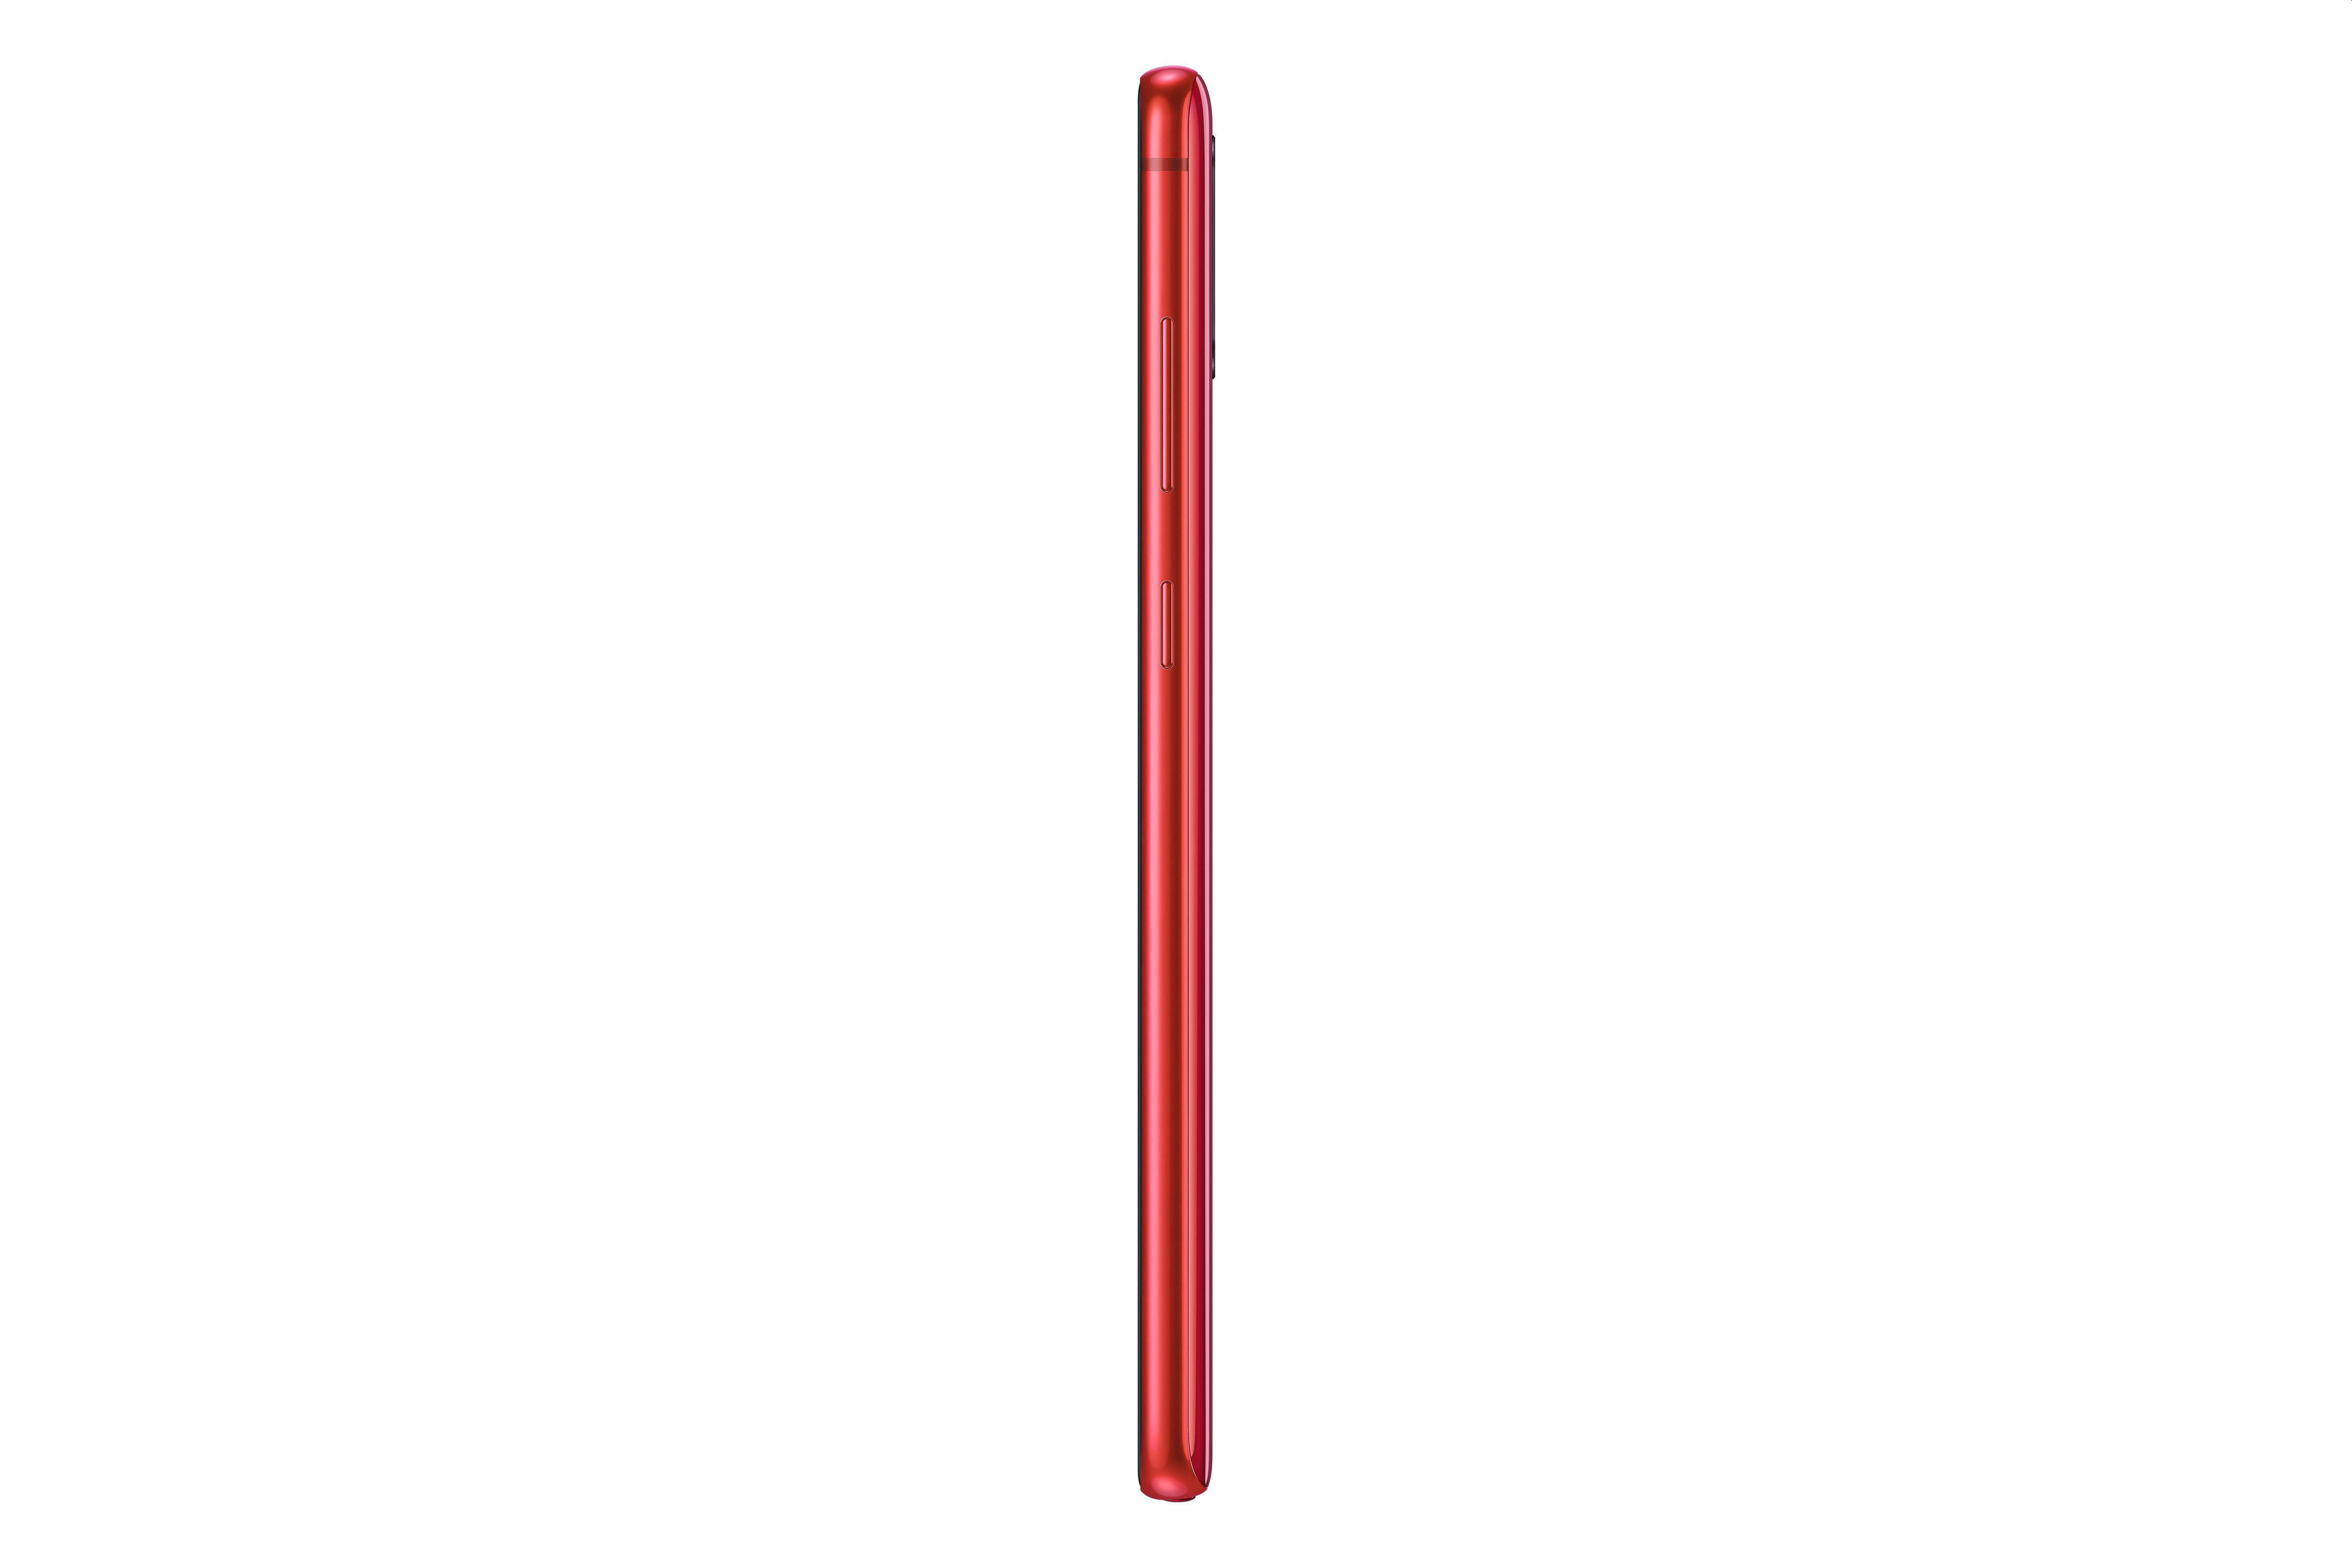 GB Red Note10 Dual 128 Galaxy SIM Aura SAMSUNG Lite